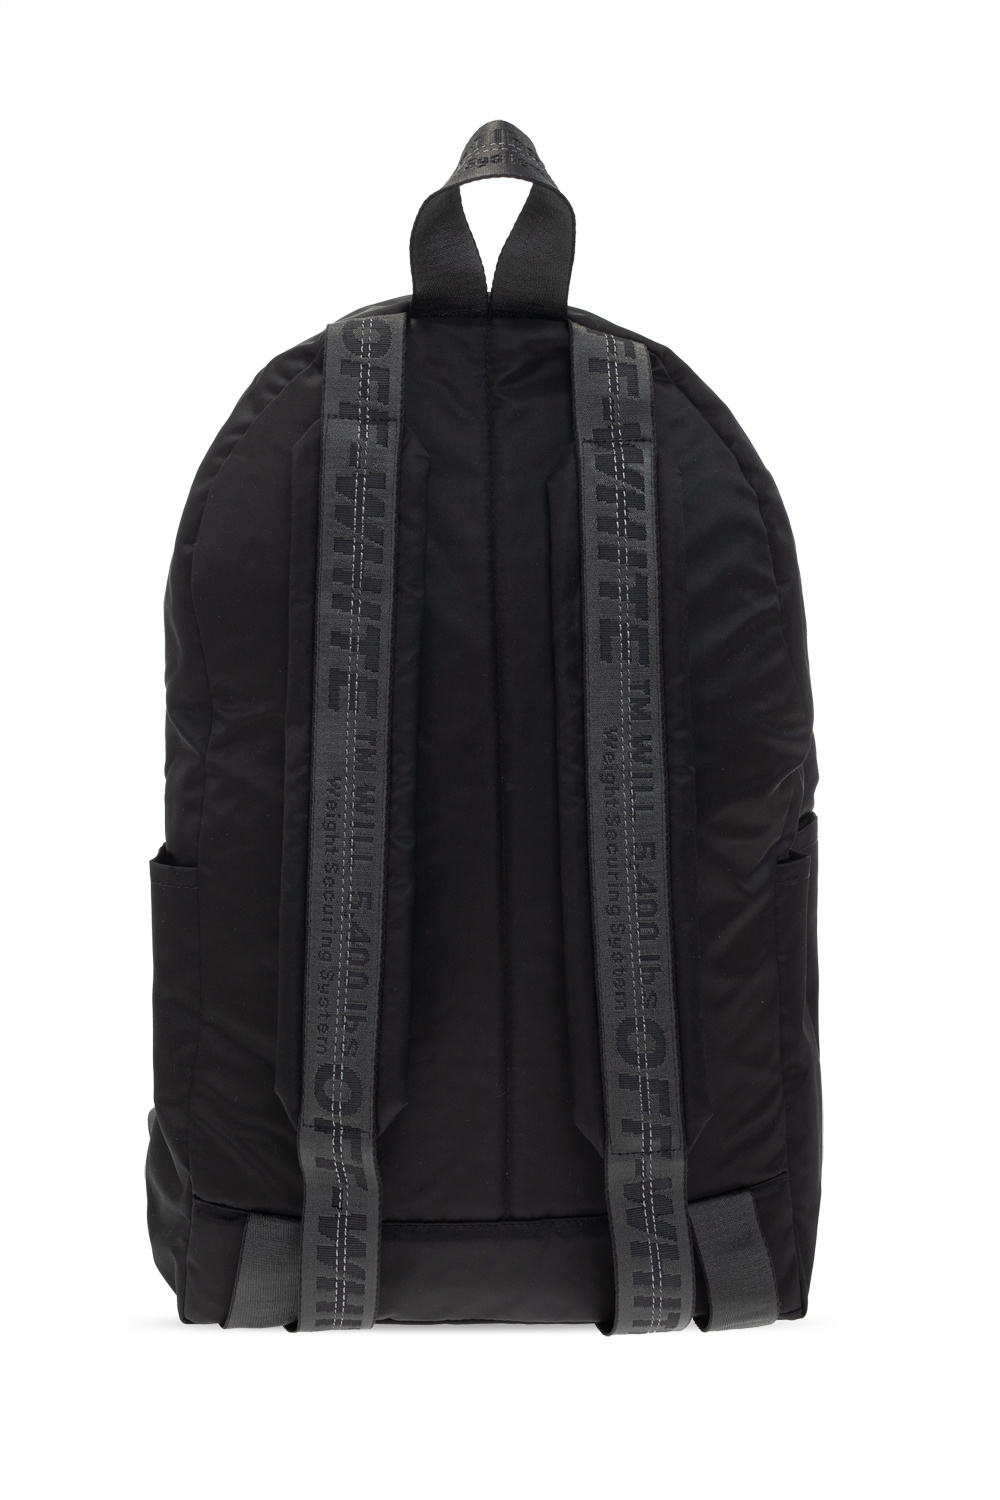 Off-White moschino black flap shoulder bag